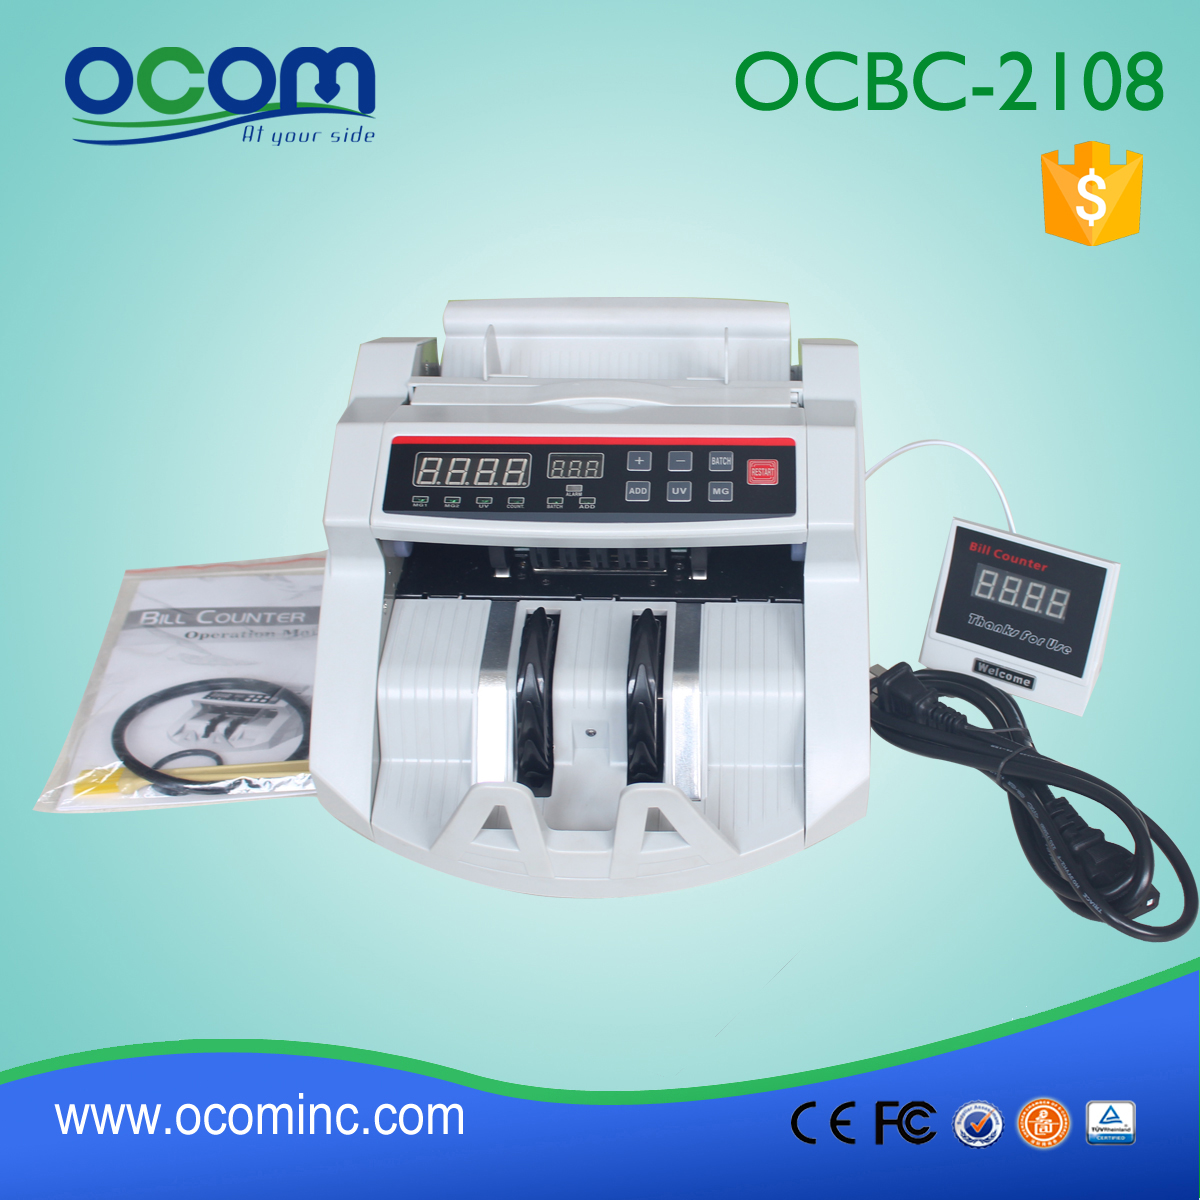 OCBC-2108 عداد الأموال الرخيصة المصنوعة في الصين